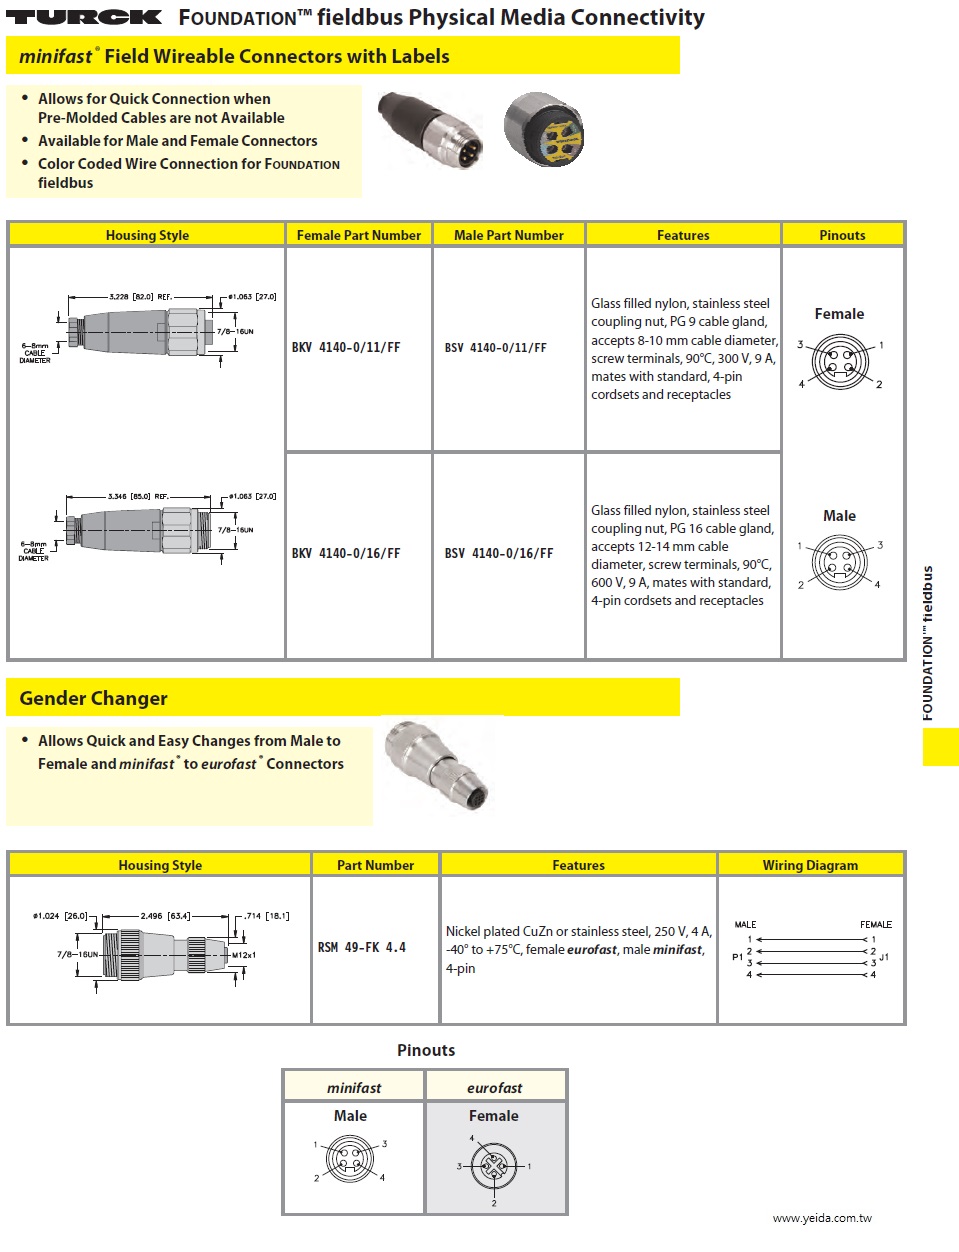 Turck-BSV FOUNDATION™ fieldbus minifast® Field Wireable Connectors with Labels 工業自動化監控制帶標籤的現場可接線連接器